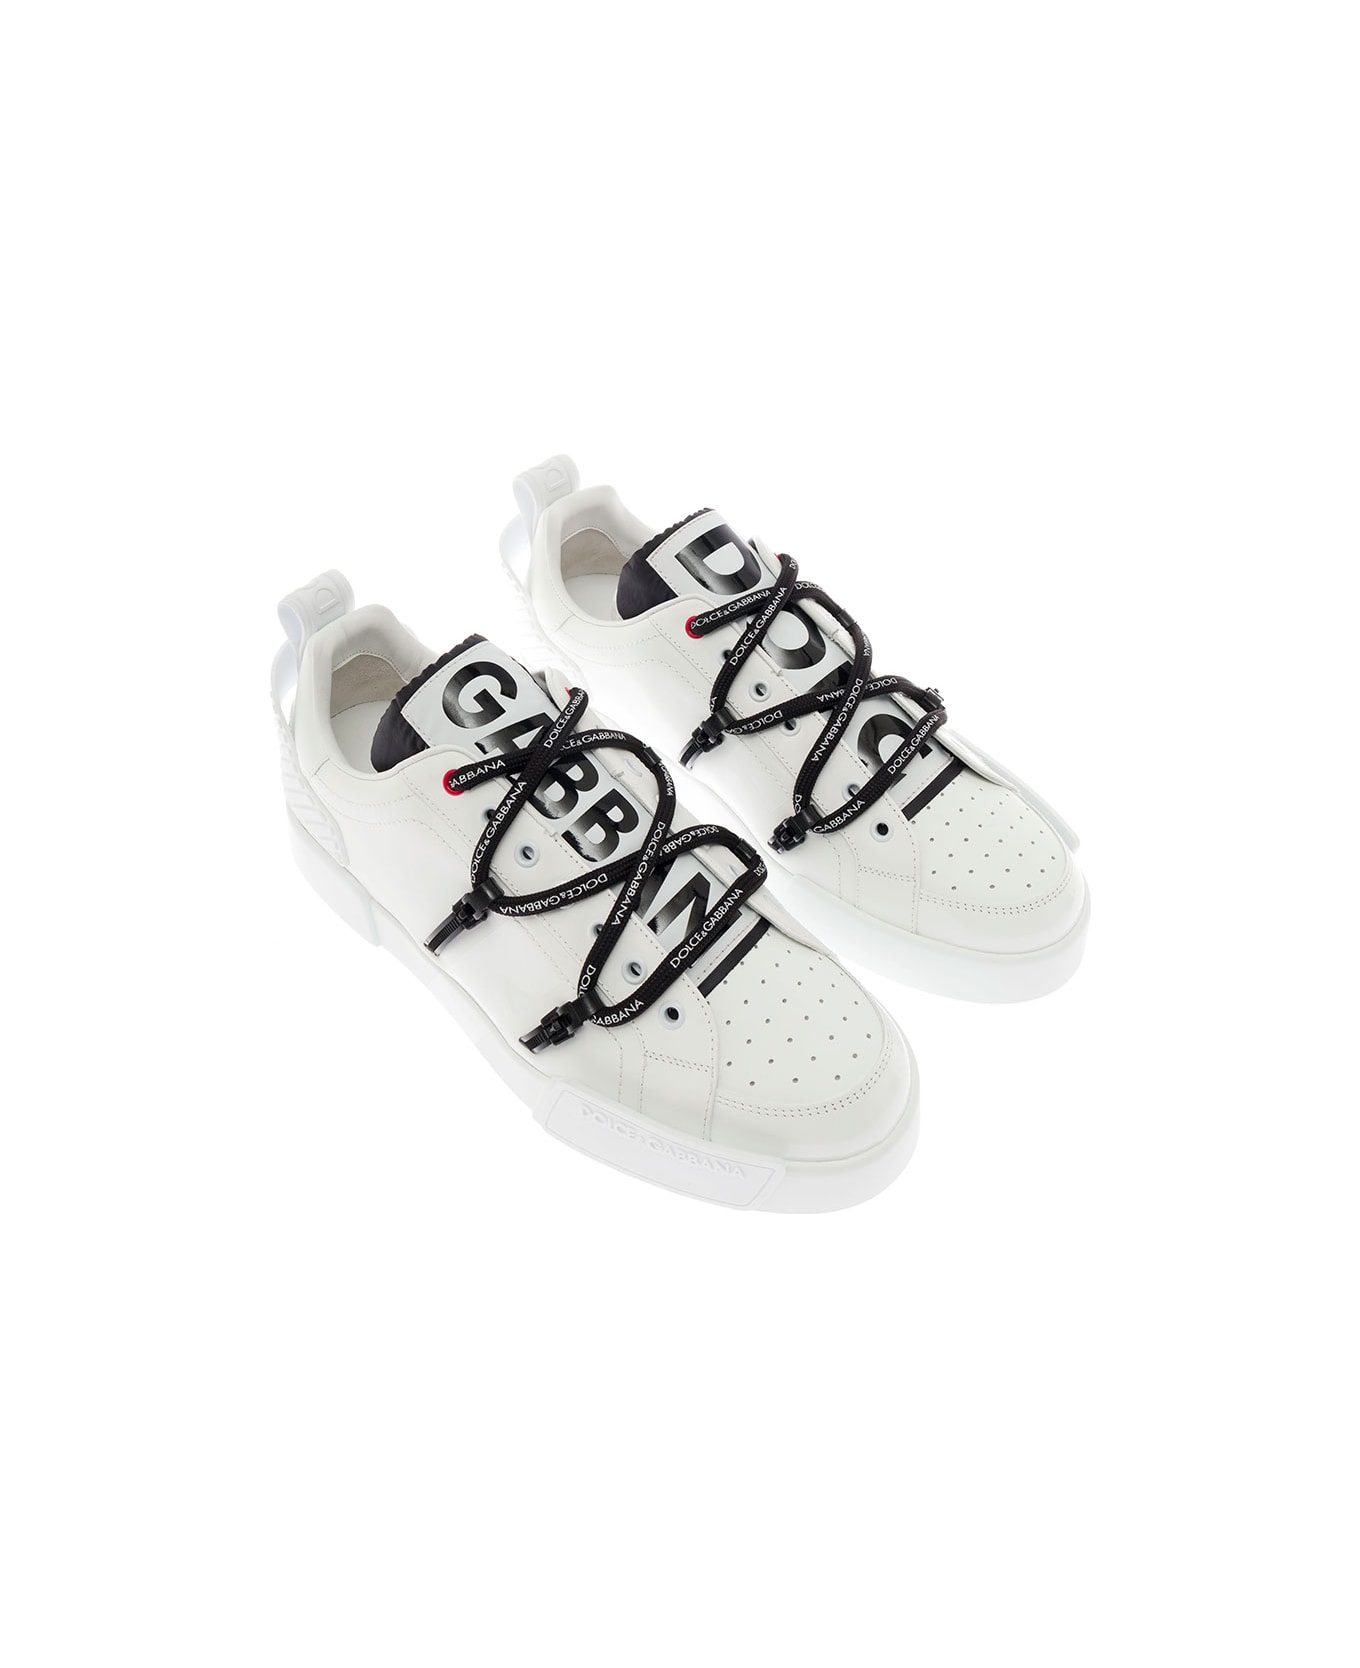 Dolce & Gabbana Man's Portofino White Leather And Patent Sneakers - White スニーカー